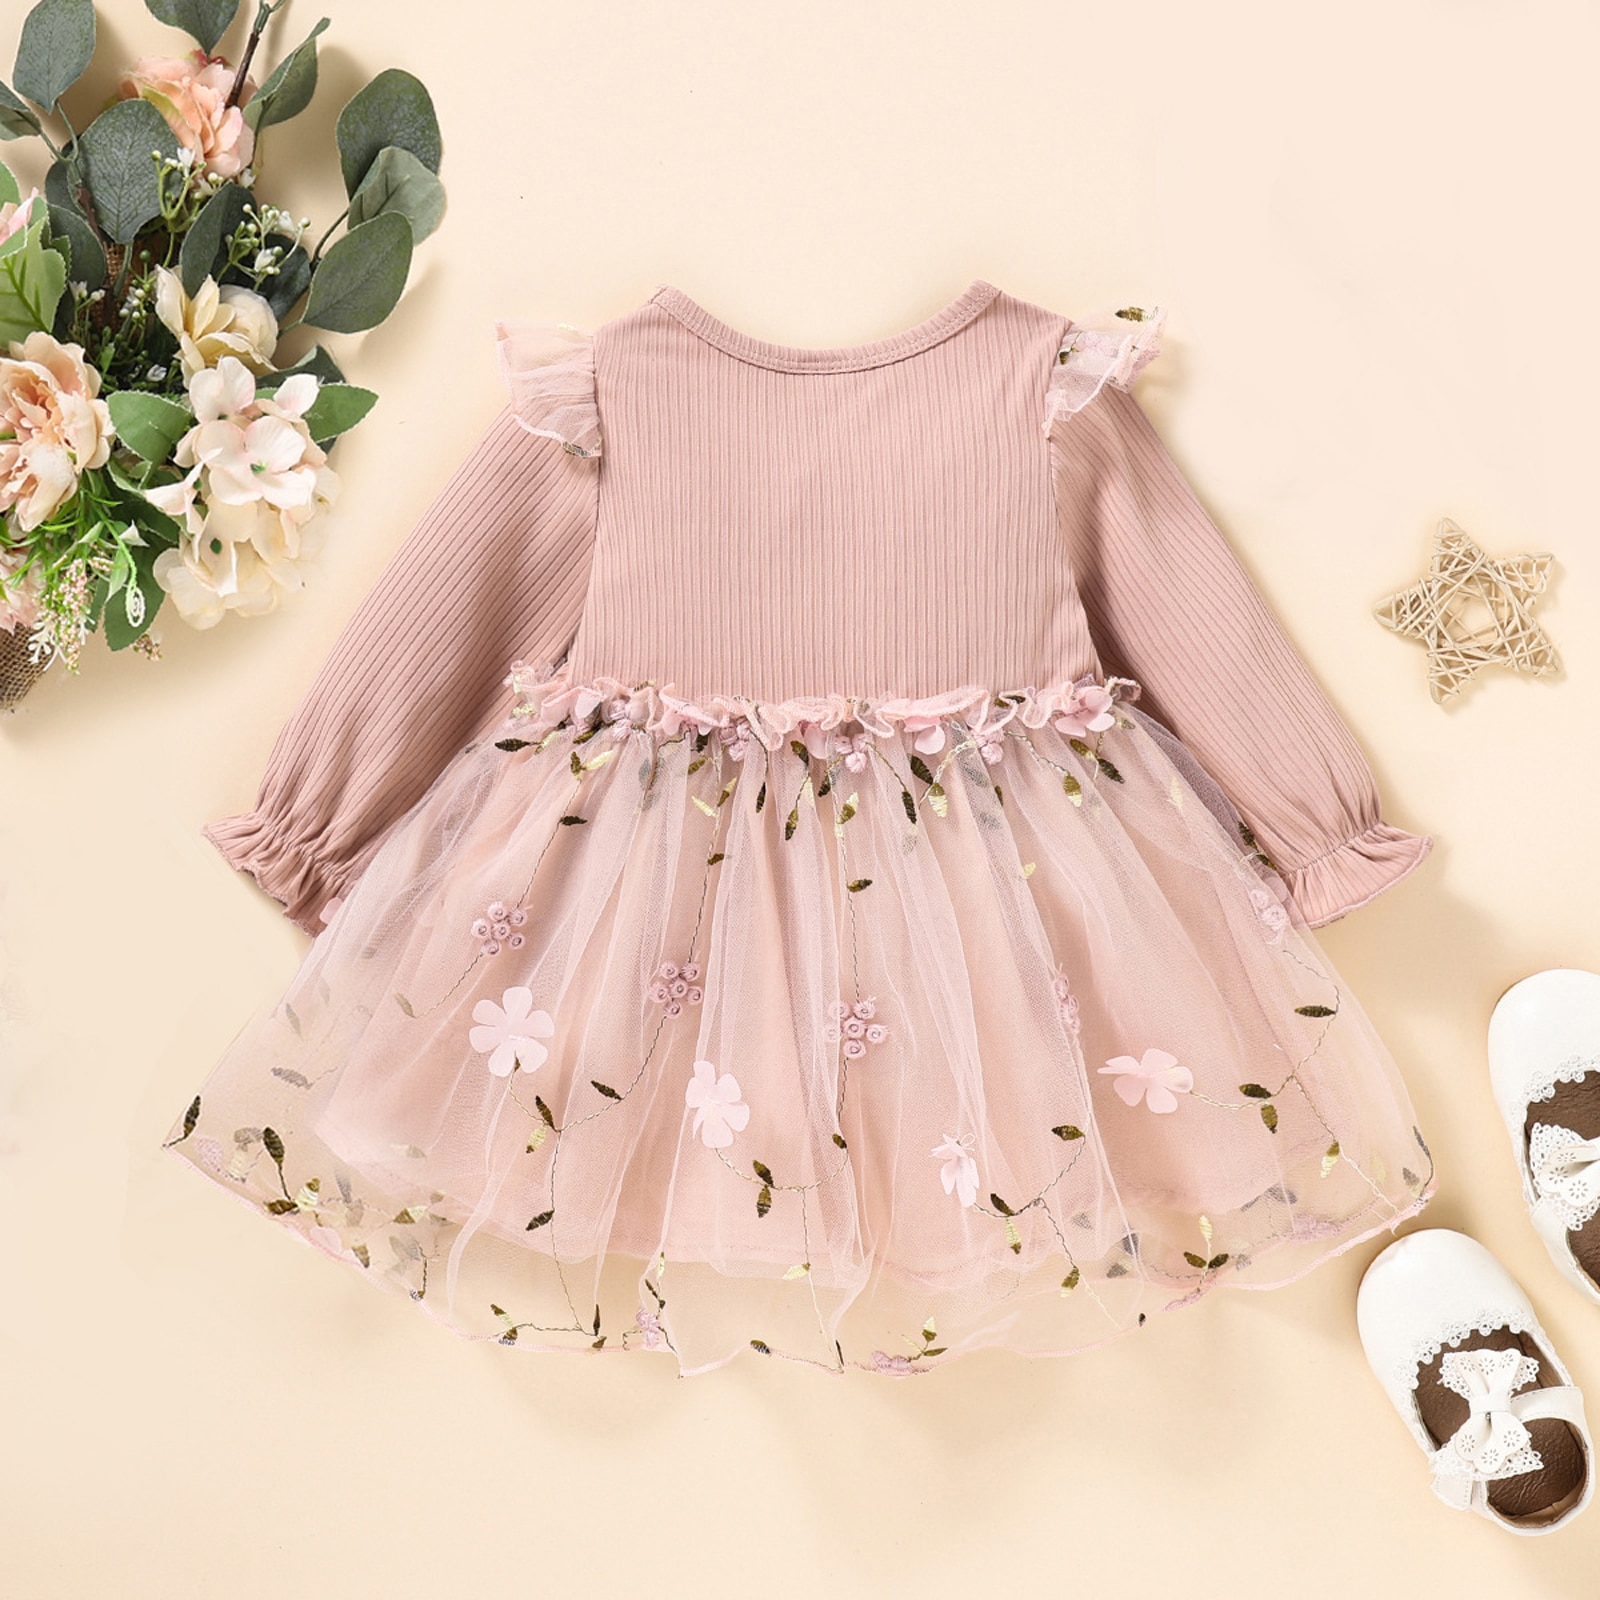 Citgeett-Autumn-Toddler-Girl-Sweet-Dress-Long-Sleeve-Flower-Embroidered-Tulle-Patchwork-A-Line-Dress-Bow-1